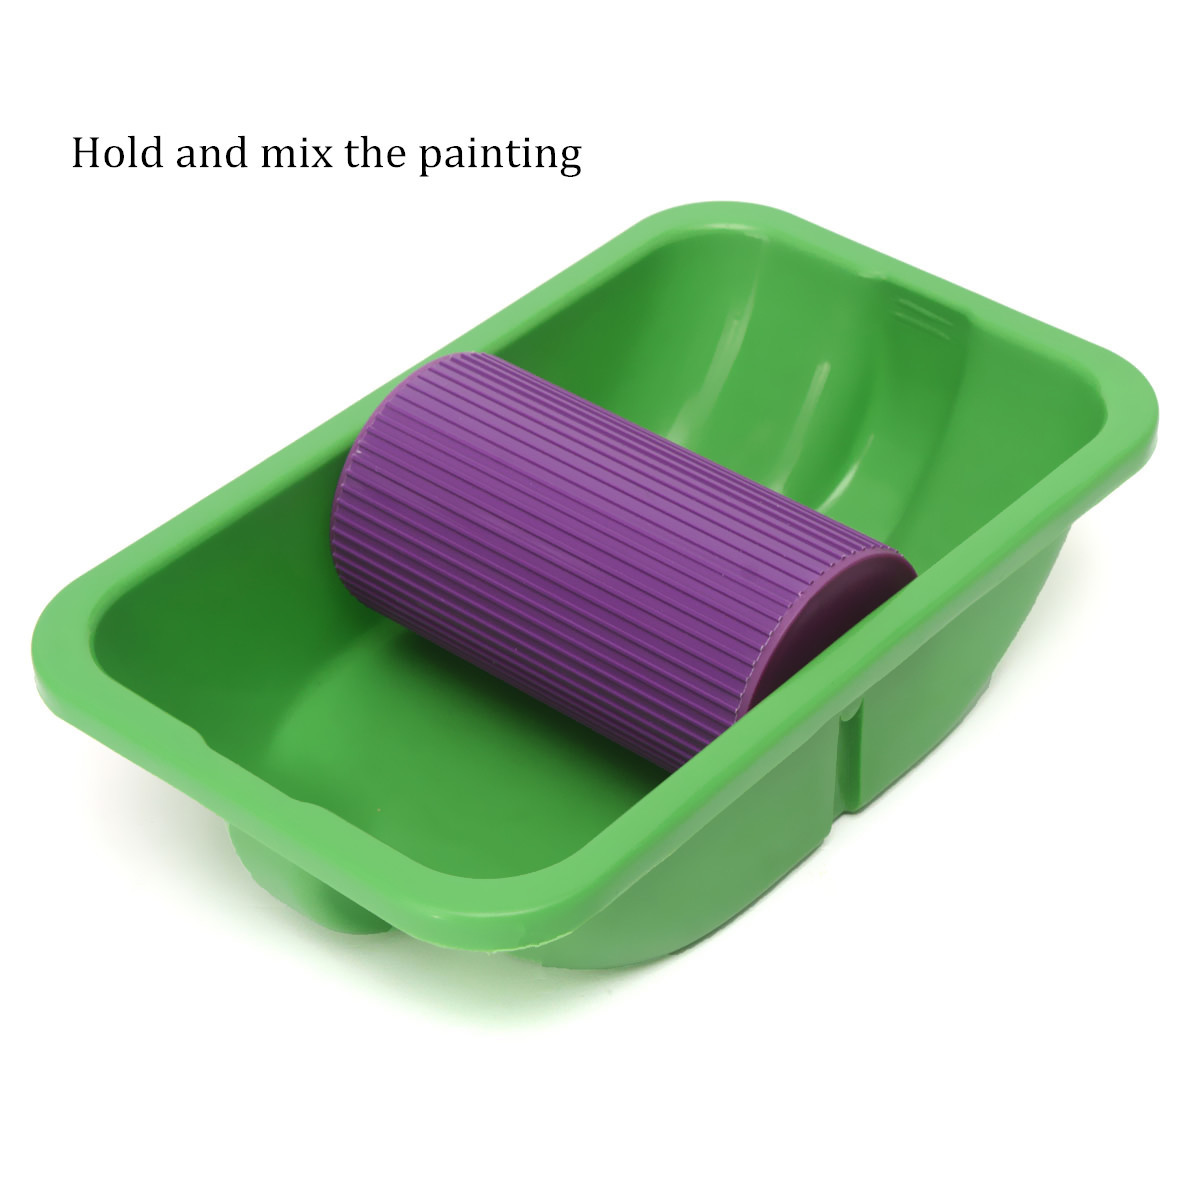 DIY-Home-Painting-Pad-Kit-Roller-Brush-Tray-Paint-Rollers-Kit-Painting-Roller-Tray-Brush-Multifuncti-1304775-2